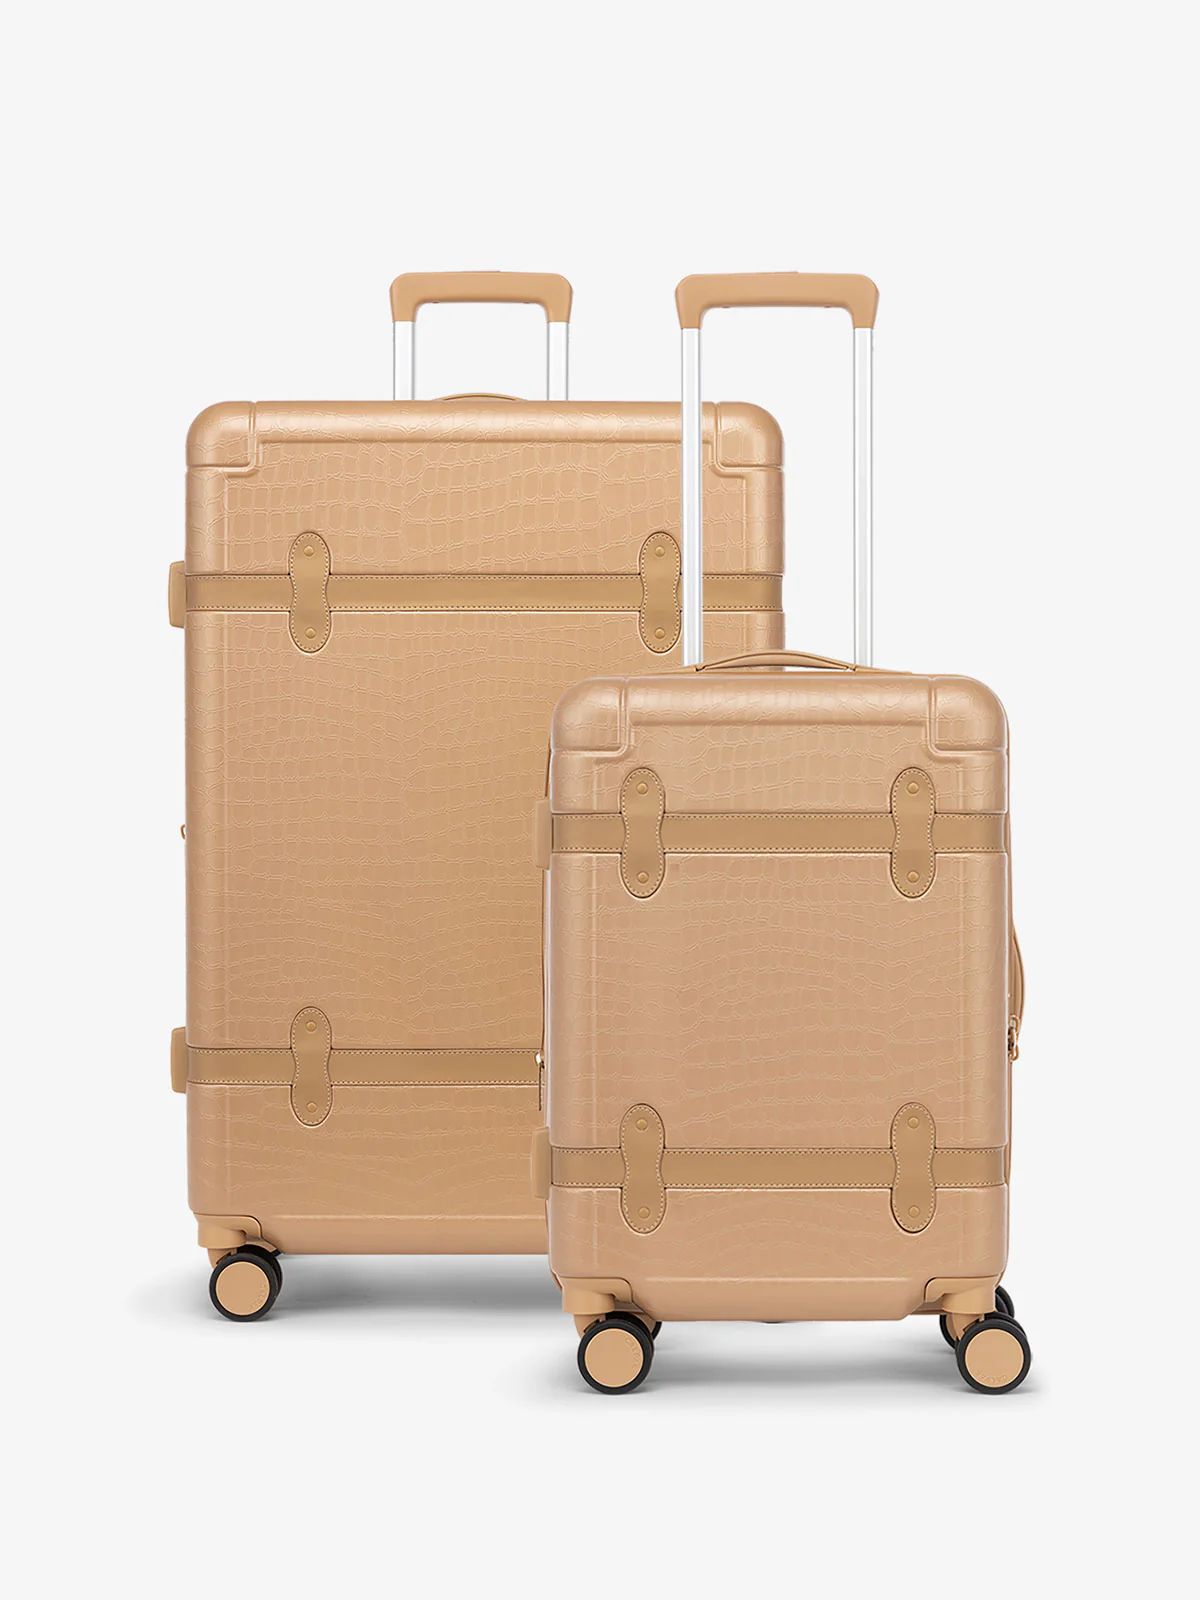 Trnk 2-Piece Luggage Set | CALPAK | CALPAK Travel